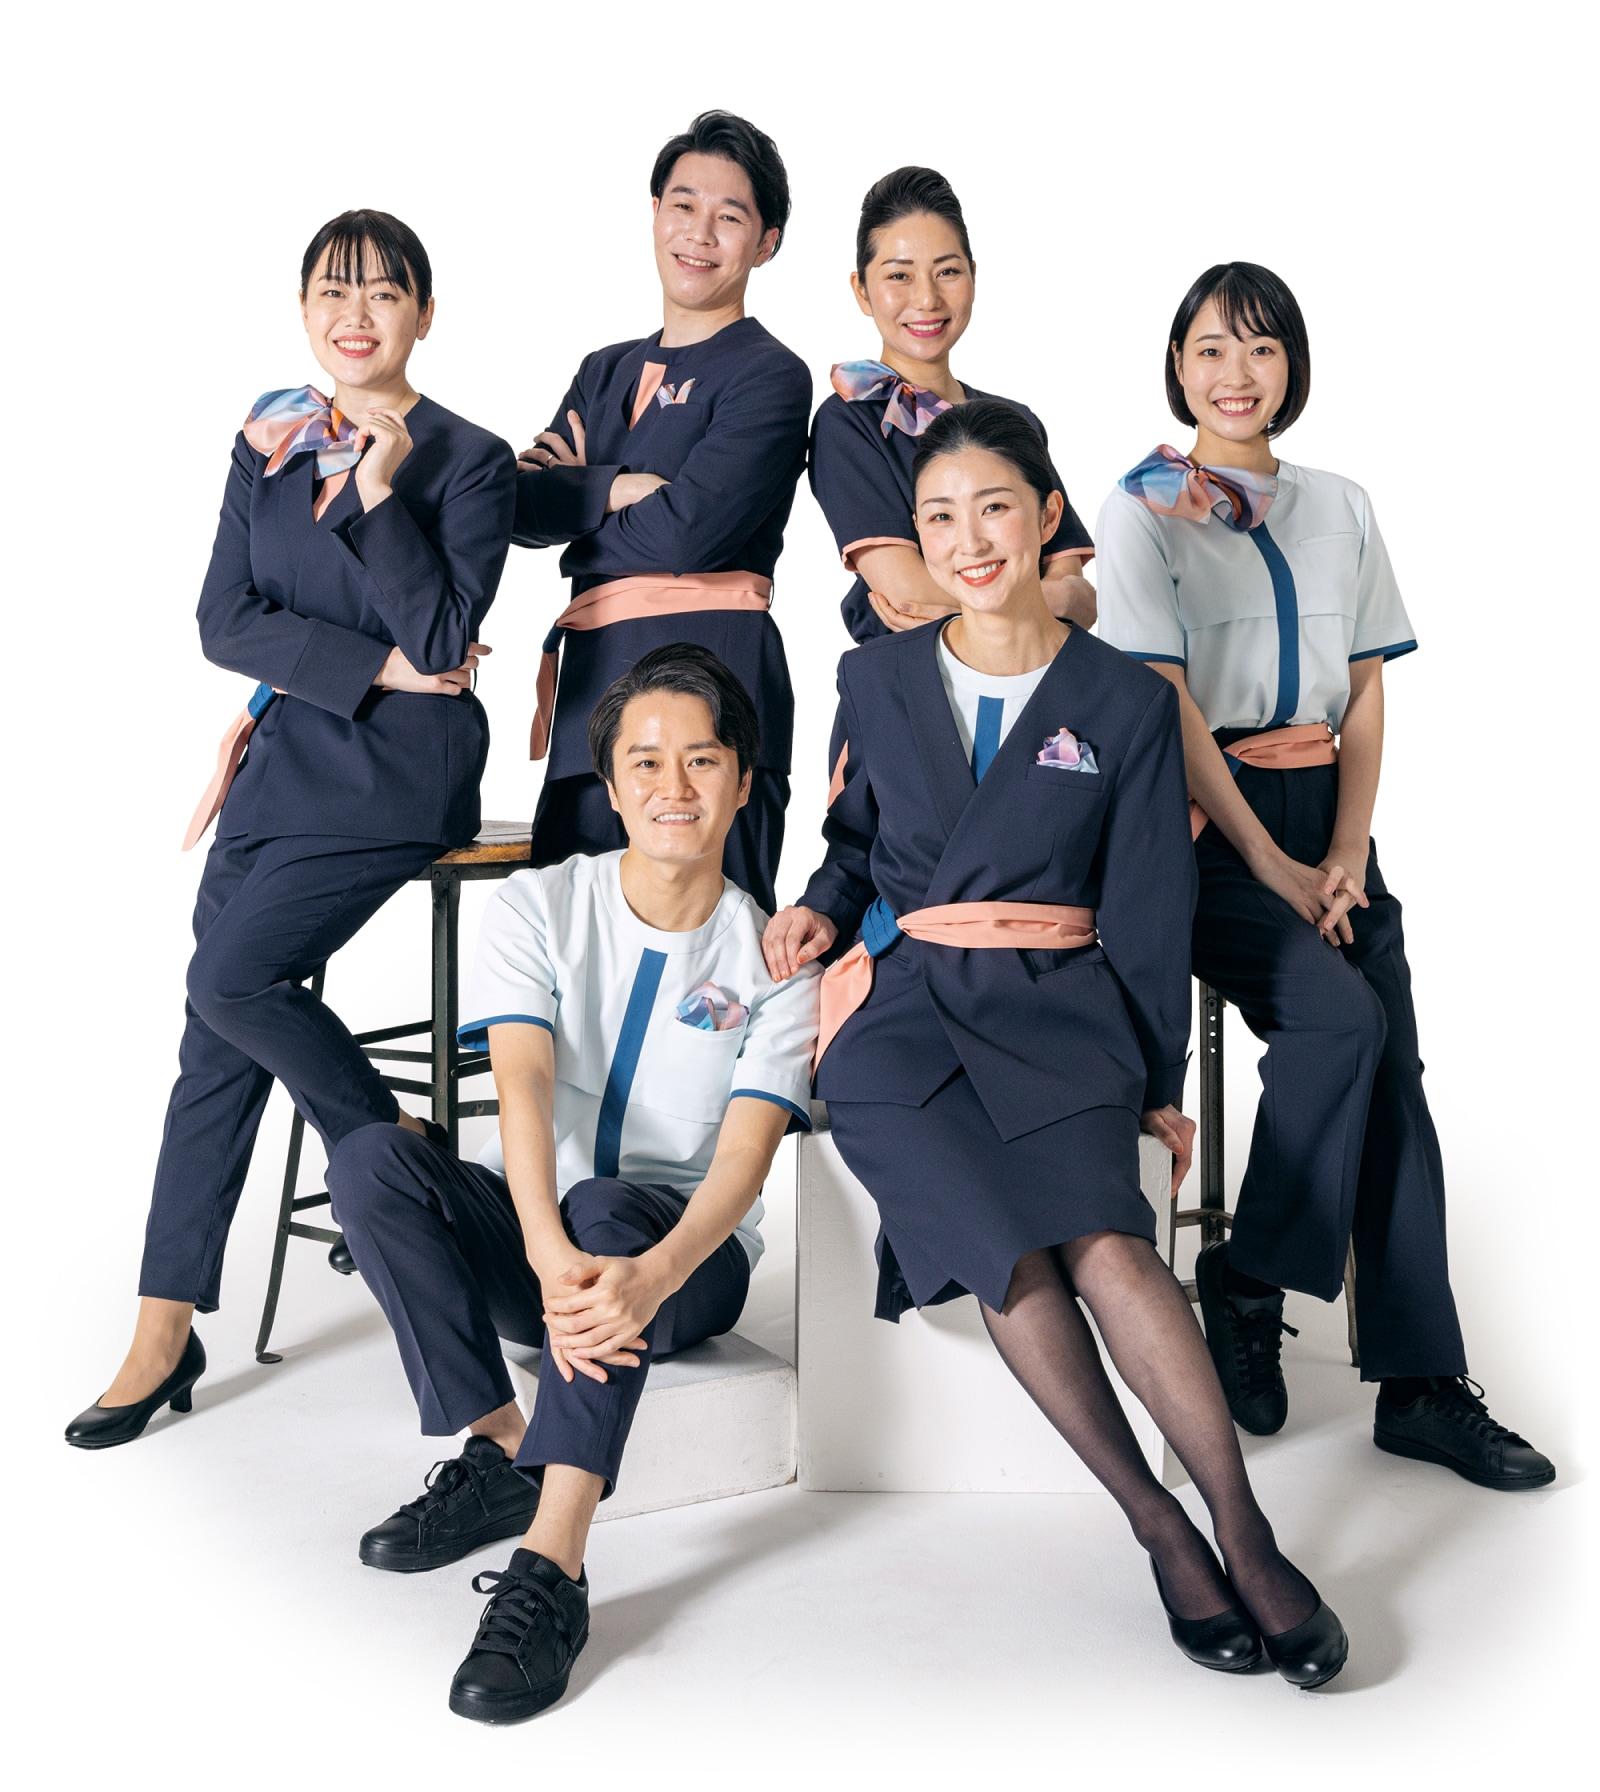 AirJapan의 유니폼을 입은 객실 승무원 6명의 사진입니다.